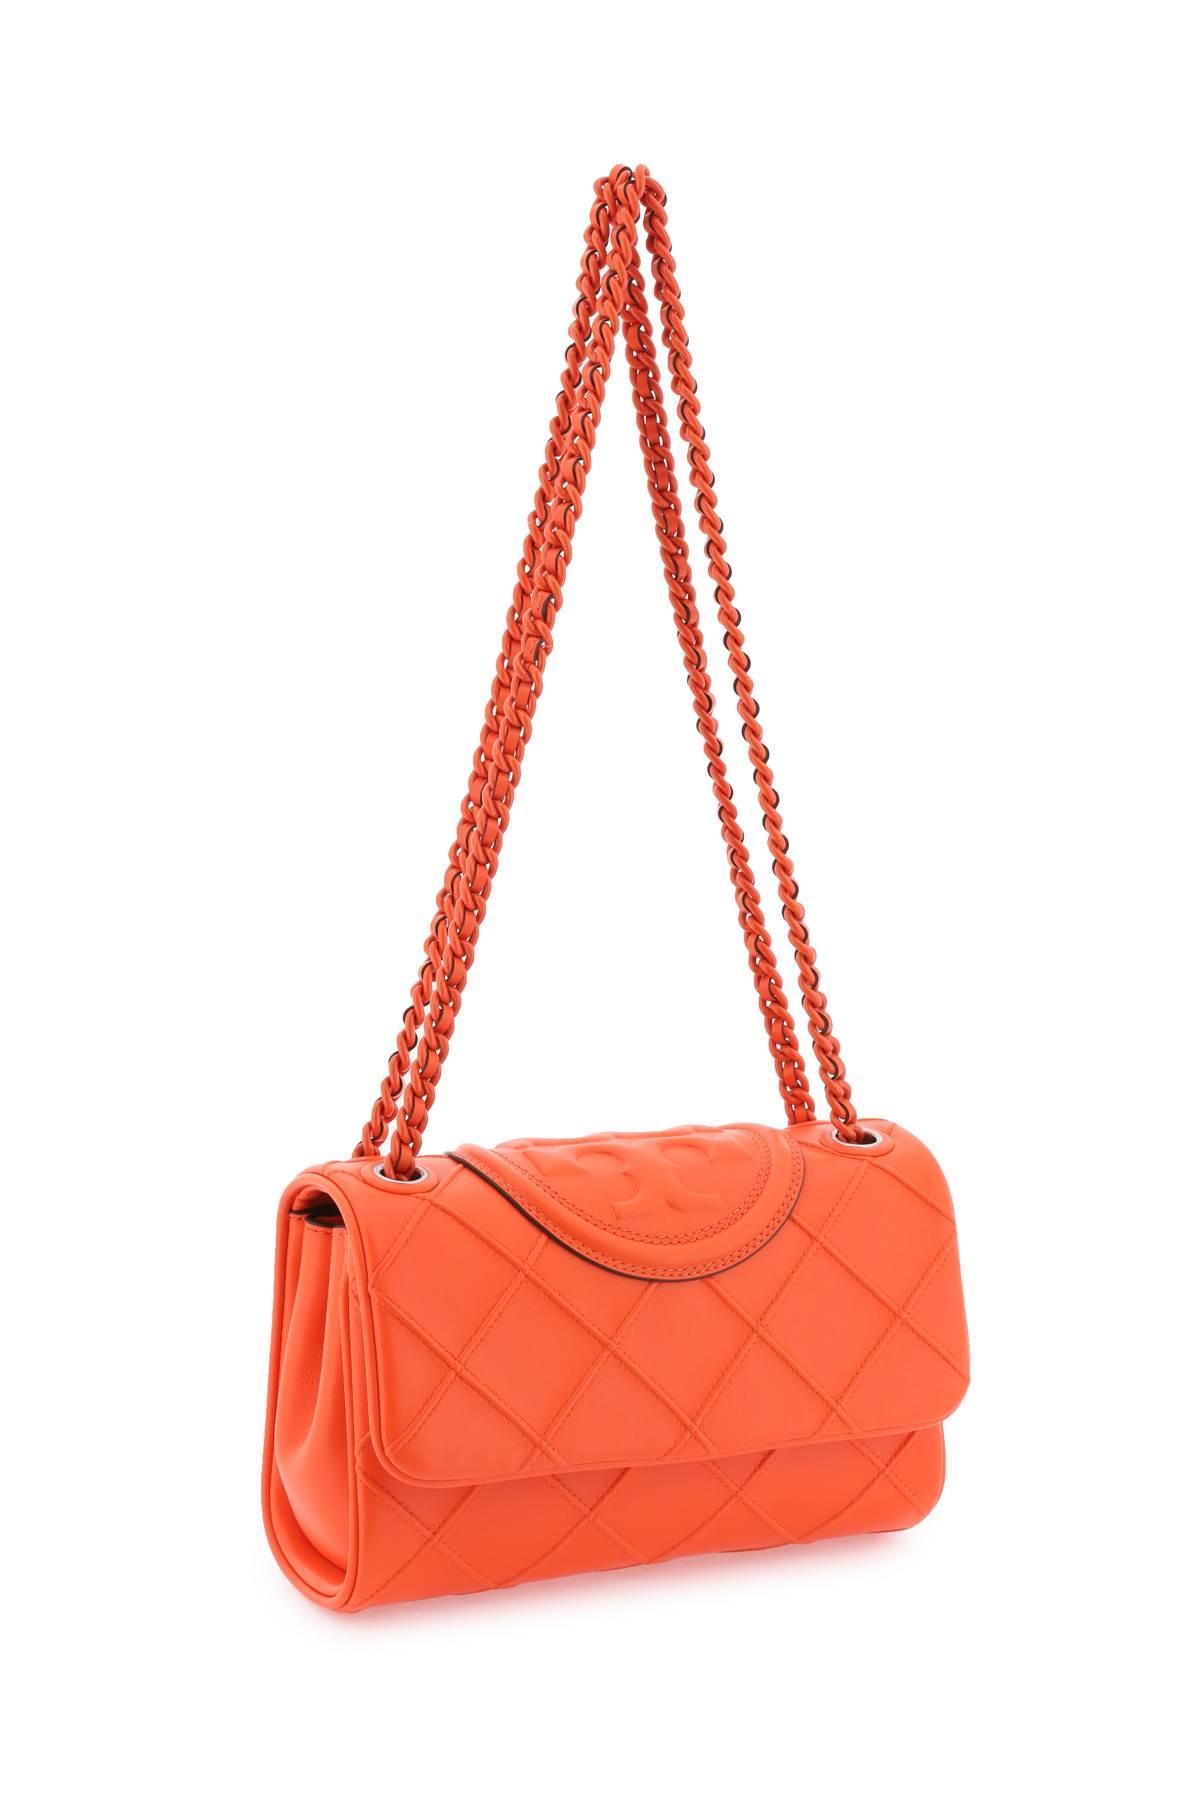 Tory Burch Fleming Soft Small Convertible Shoulder Bag For Women (Orange, OS)